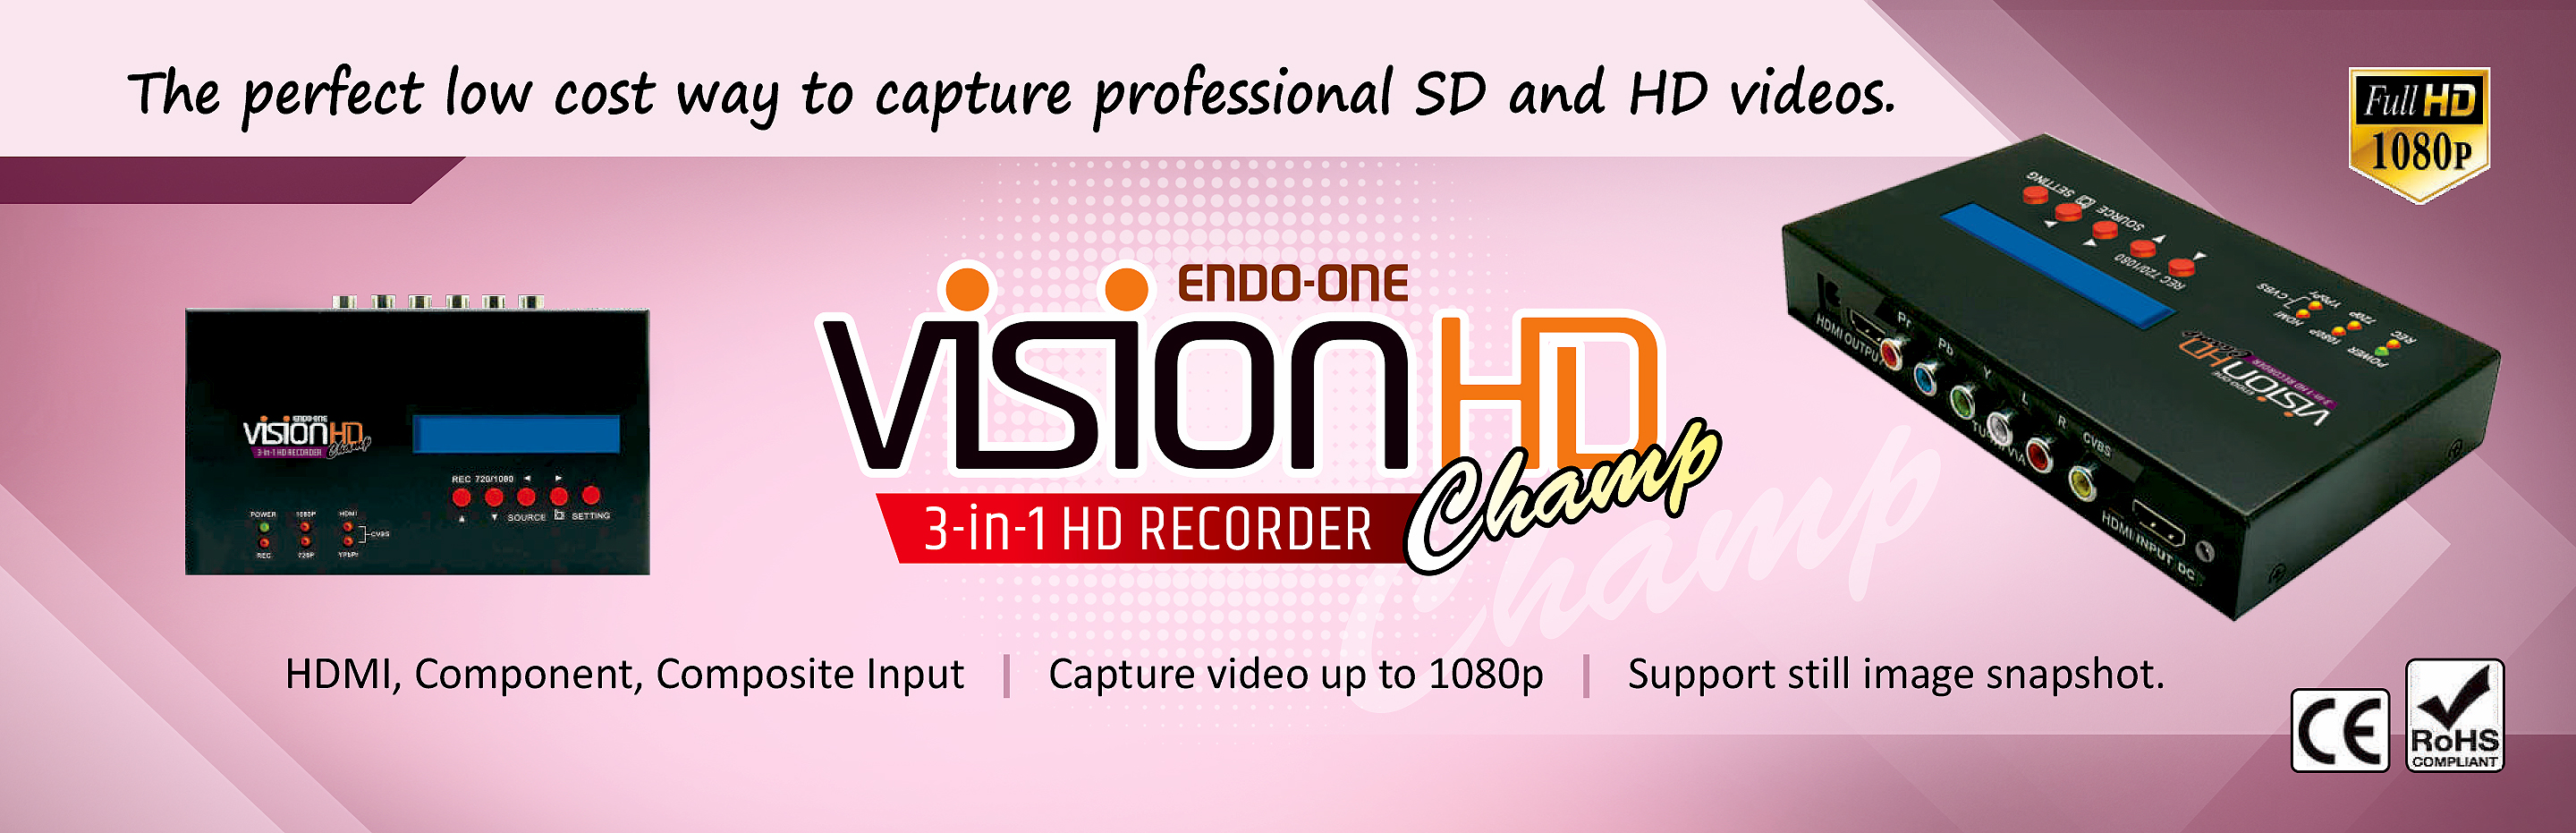 Vision HD Champ